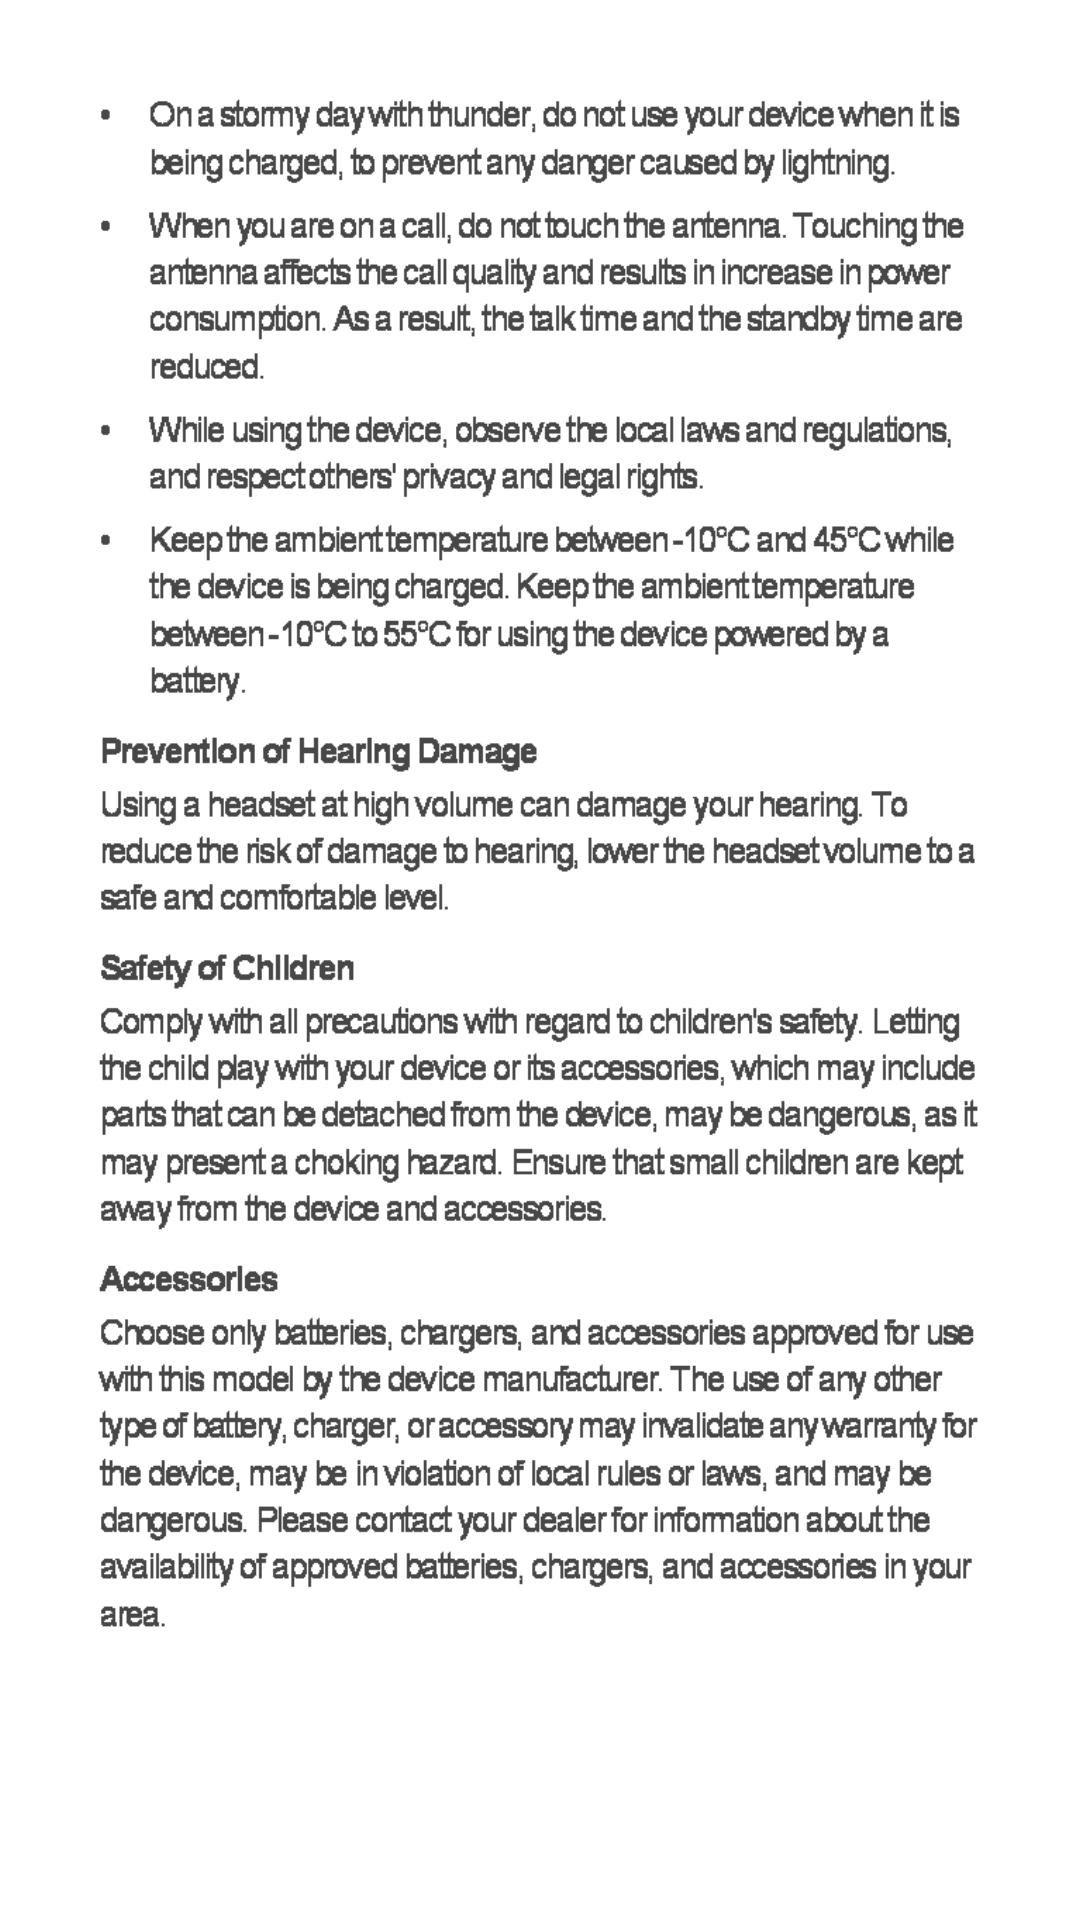 Huawei U8655-1 quick start Prevention of Hearing Damage, Safety of Children, Accessories 